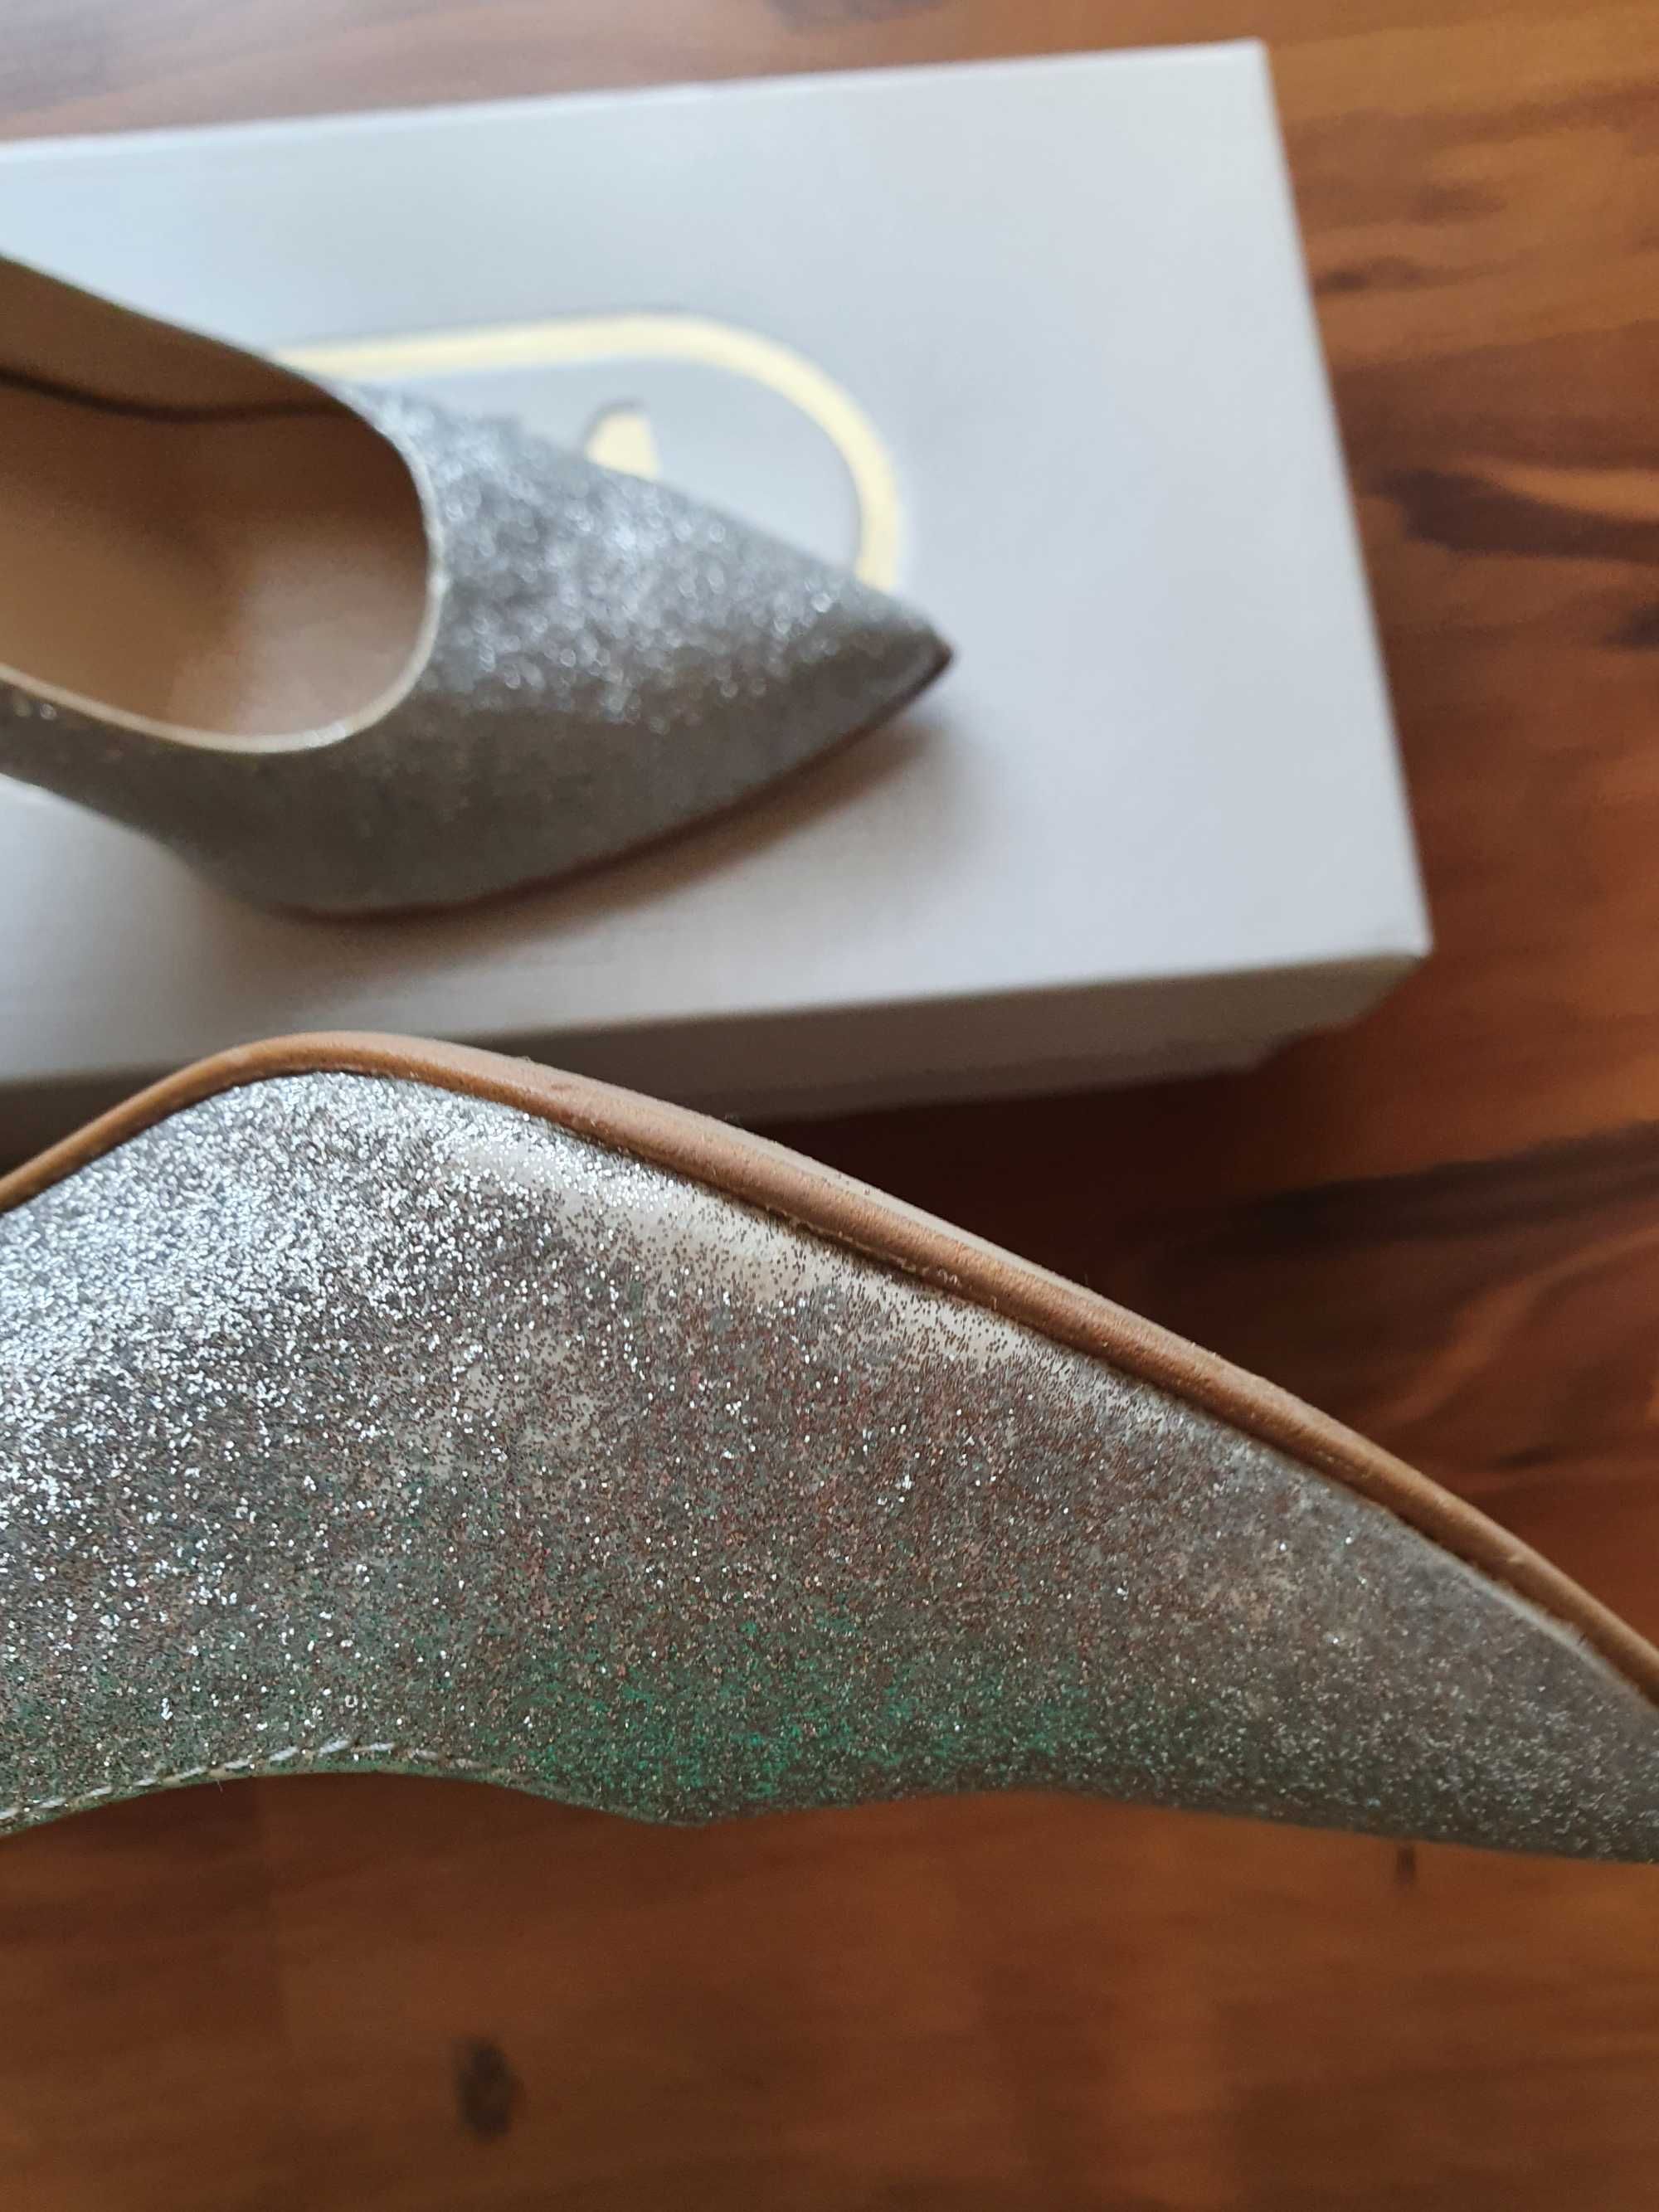 Ślubne buty skórzane witt brokatowe srebrne